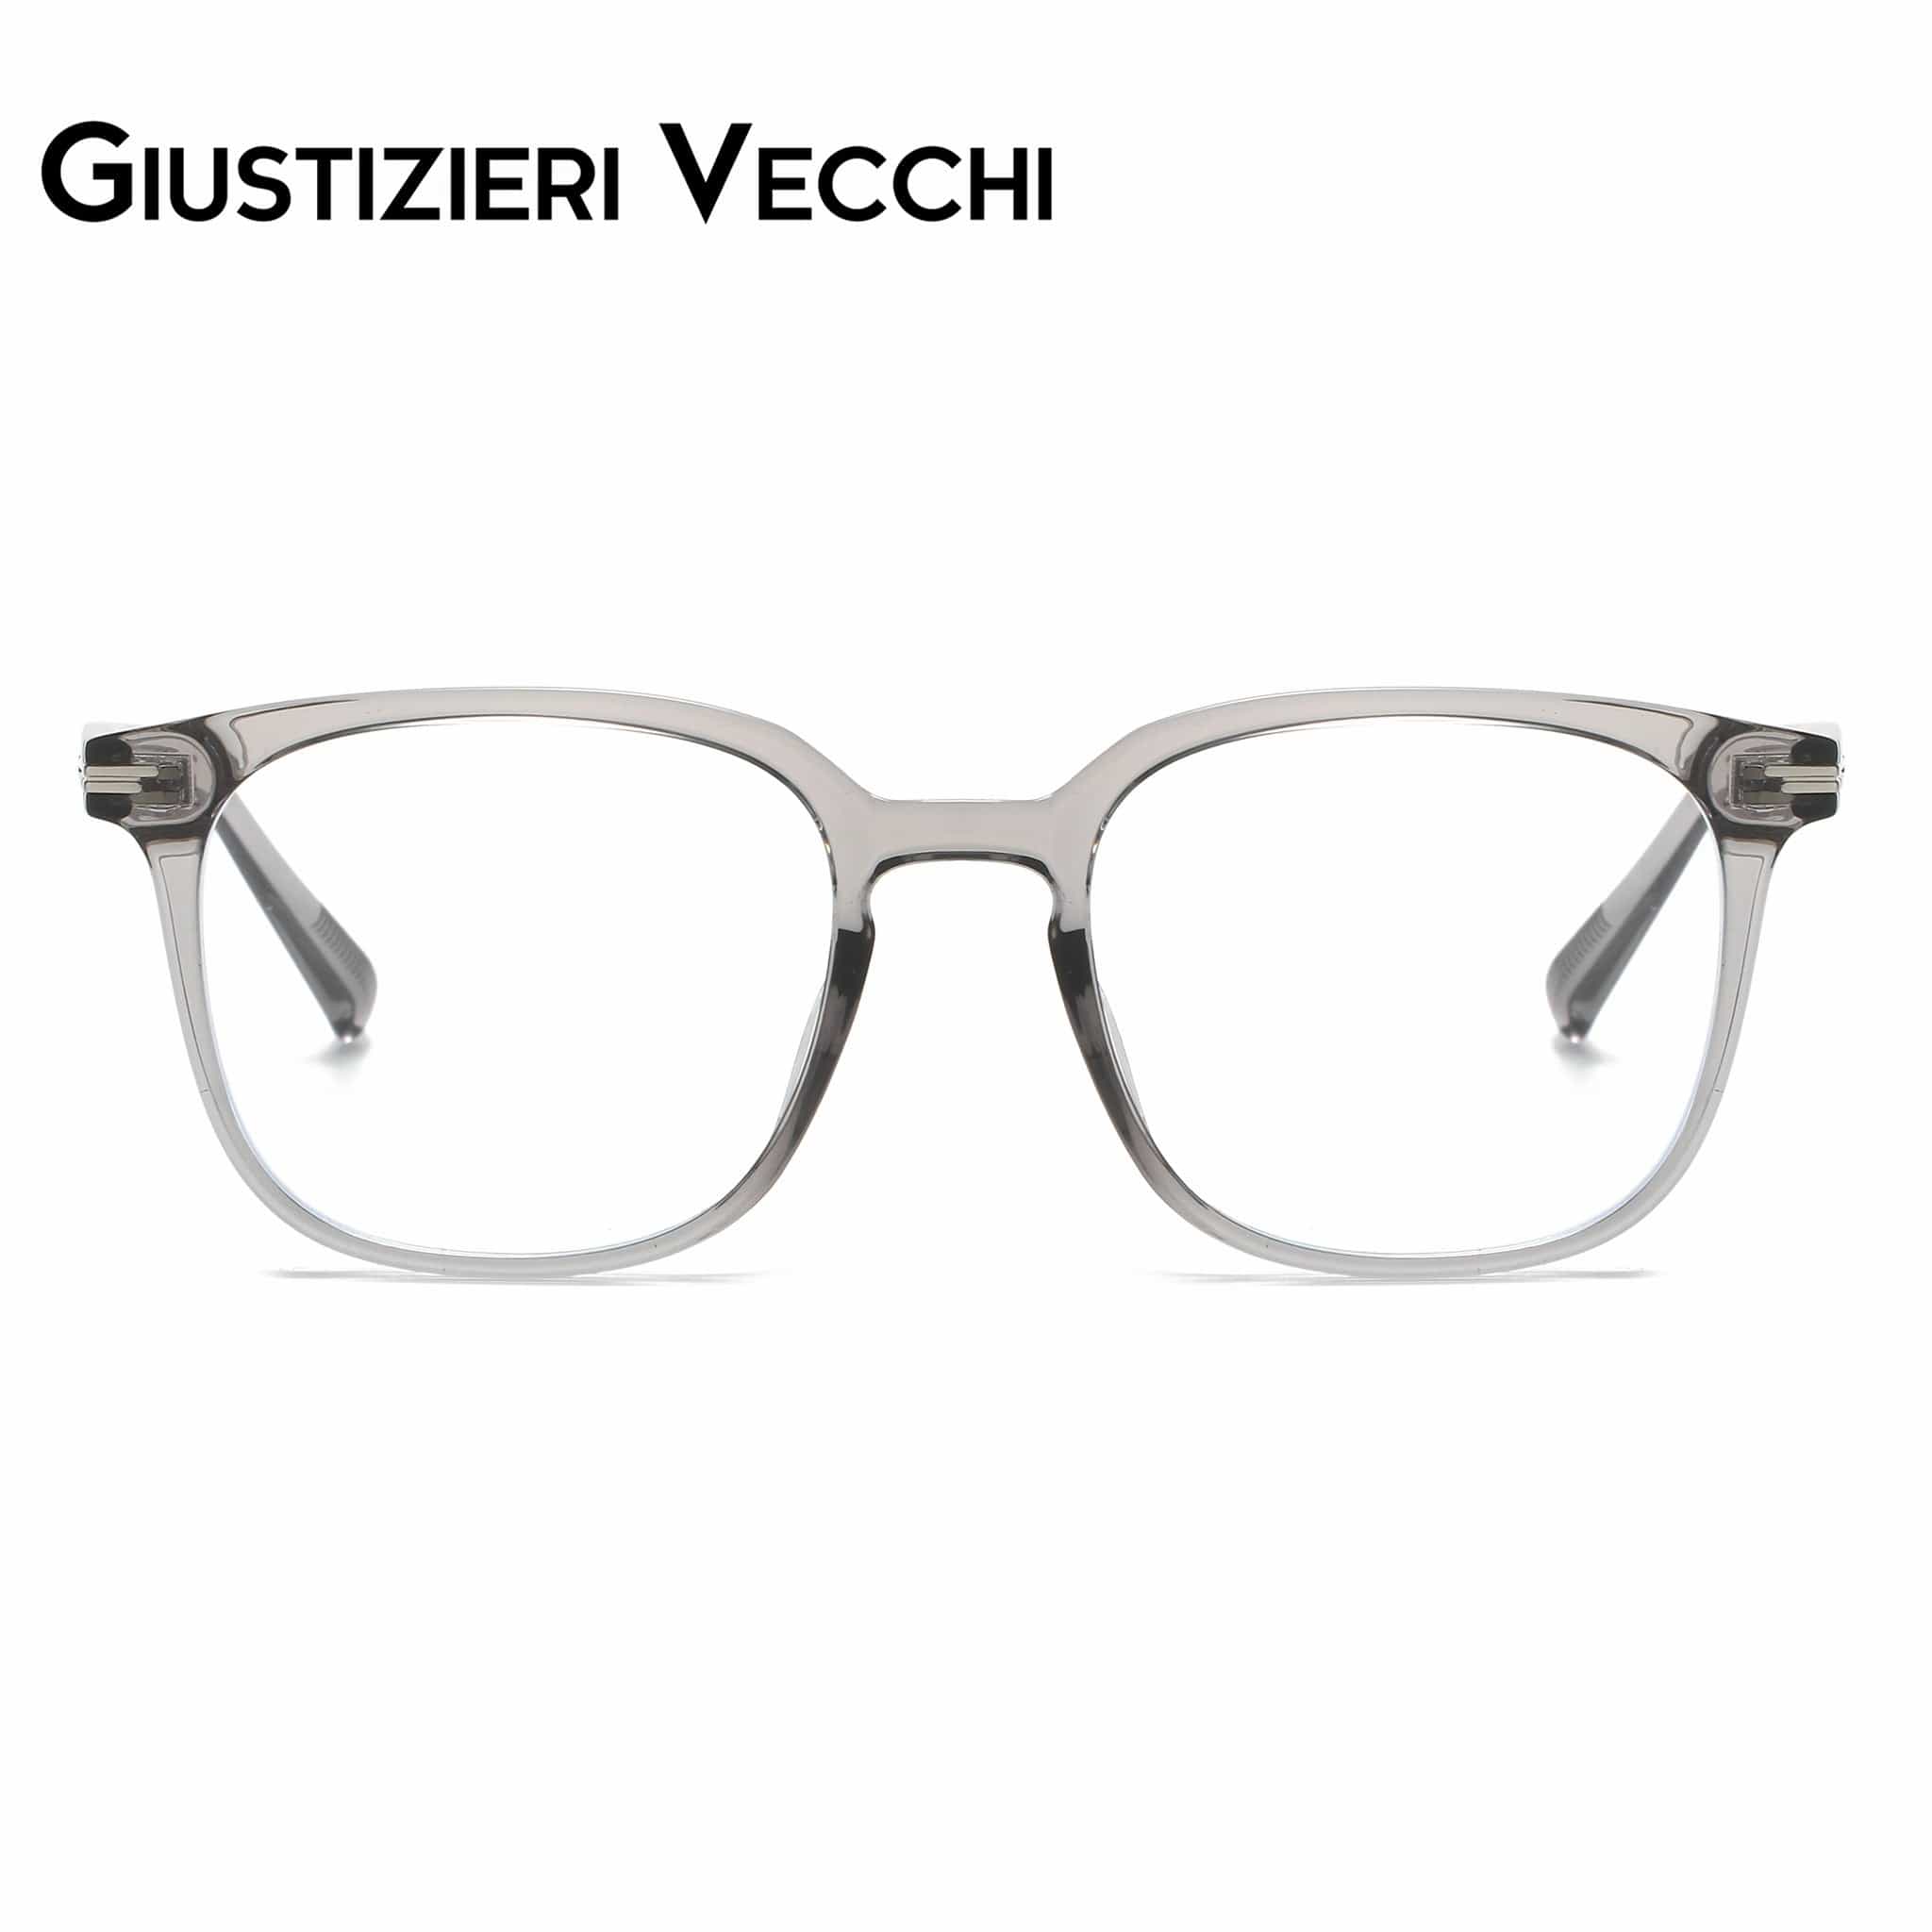 GIUSTIZIERI VECCHI Eyeglasses Medium / Sea Glass Grey SkyBloom Uno